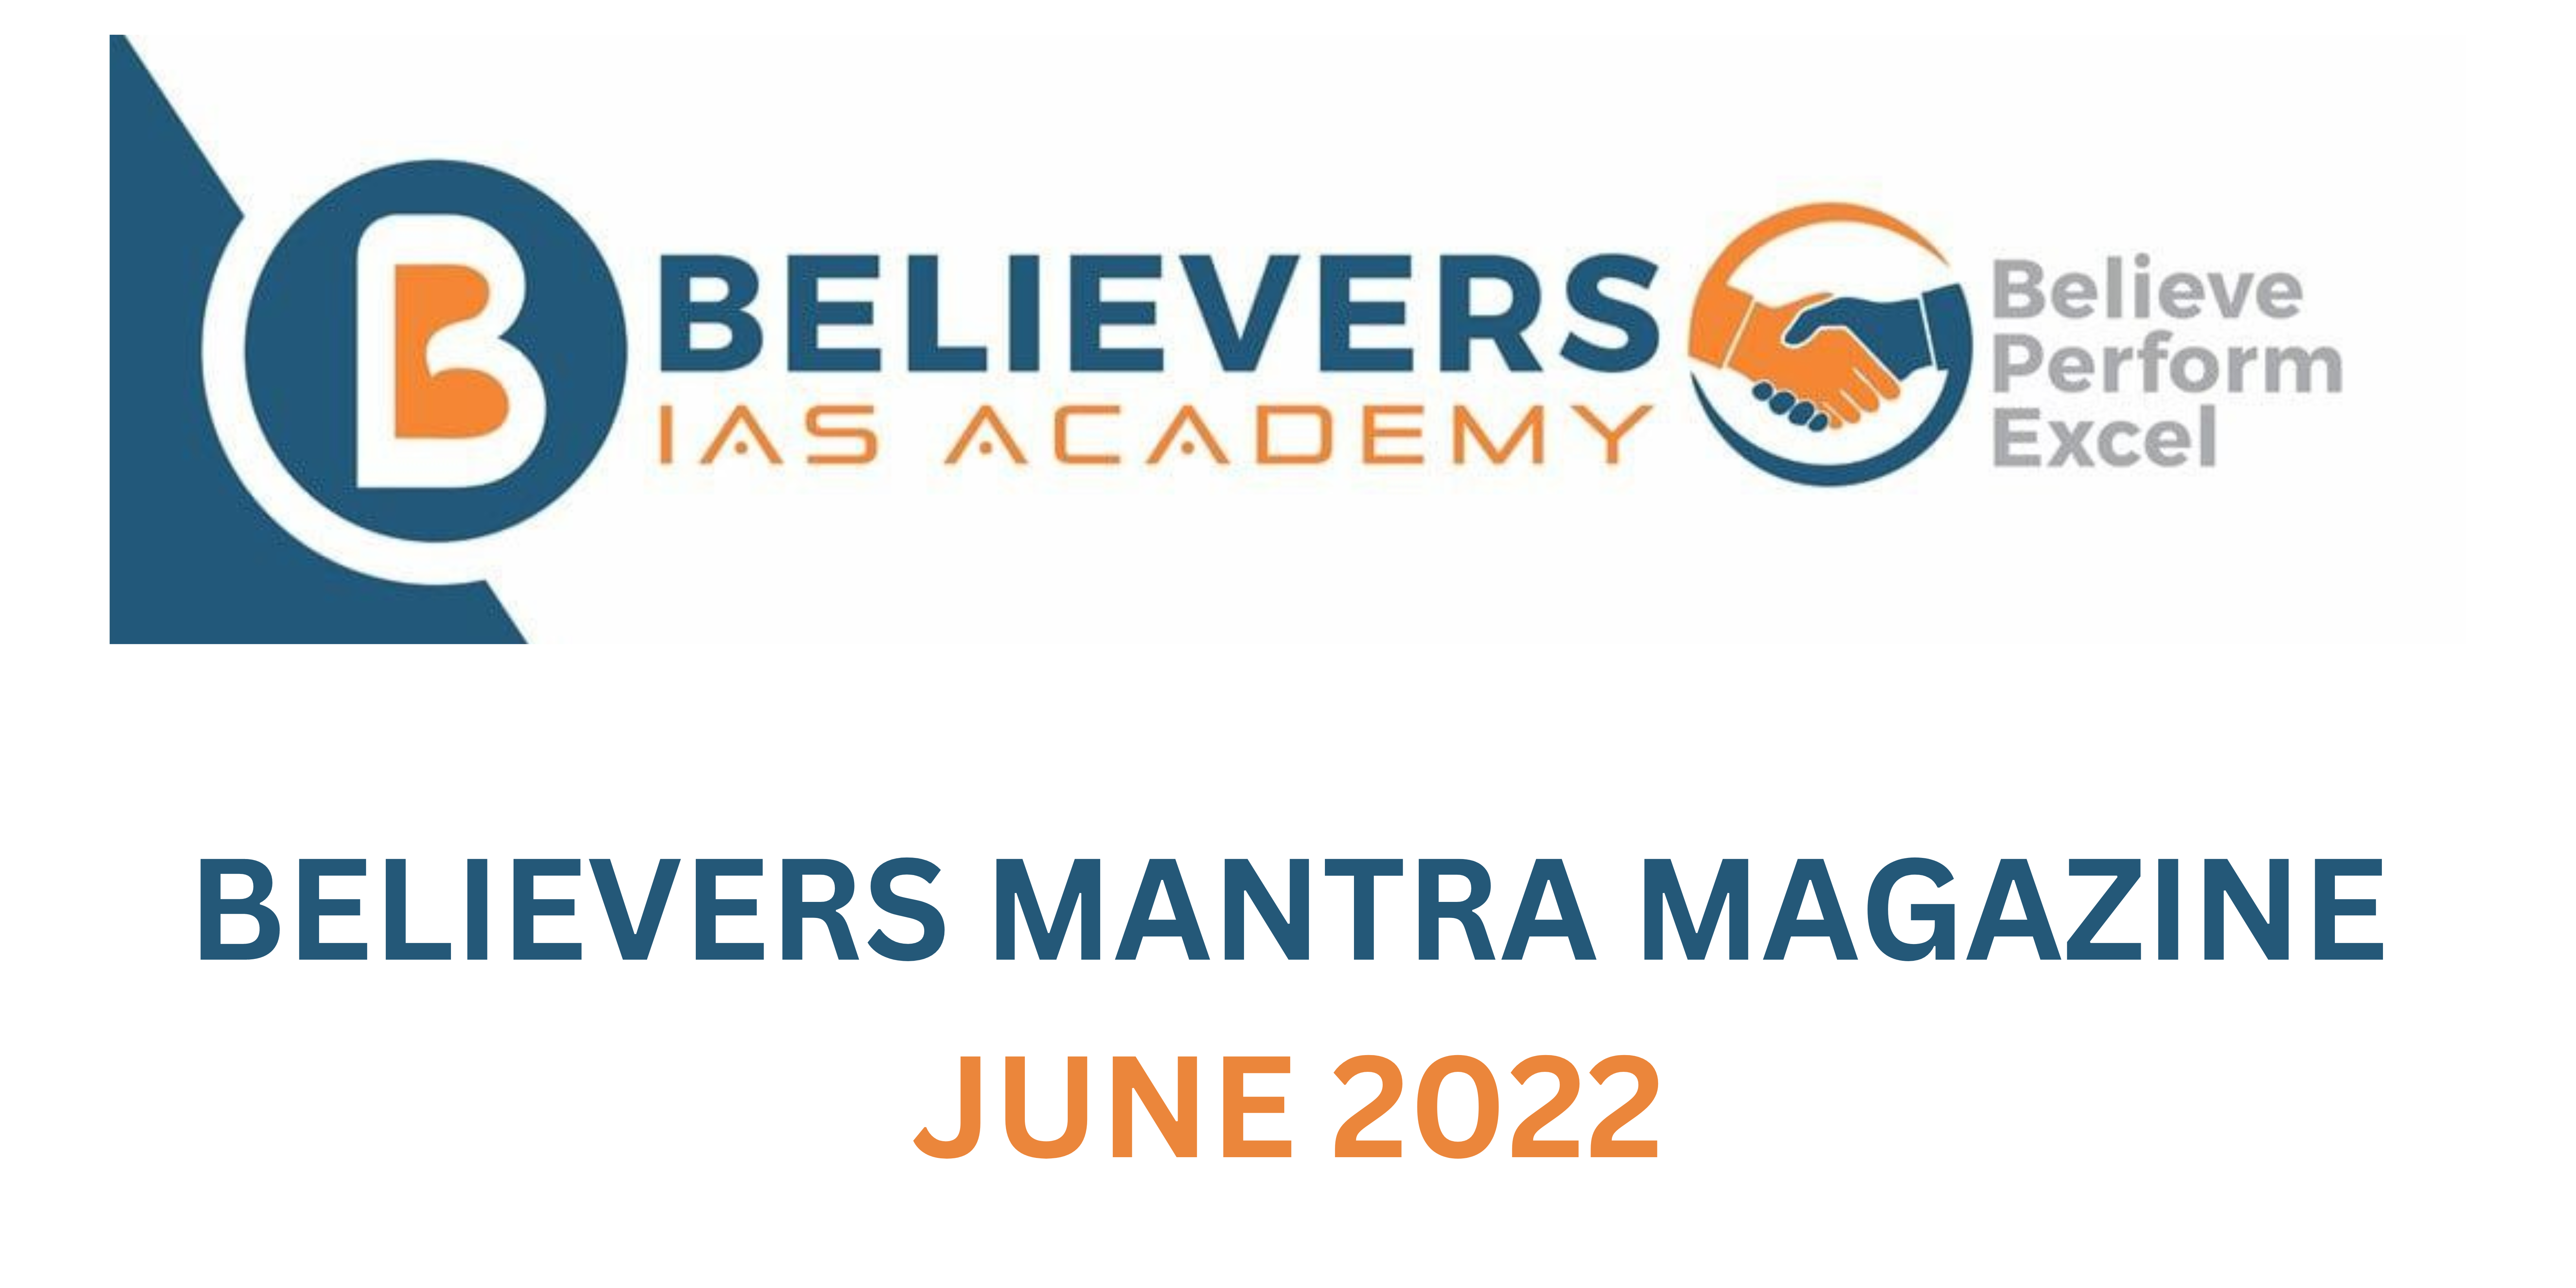 Believers Mantra Magazines - June 2022